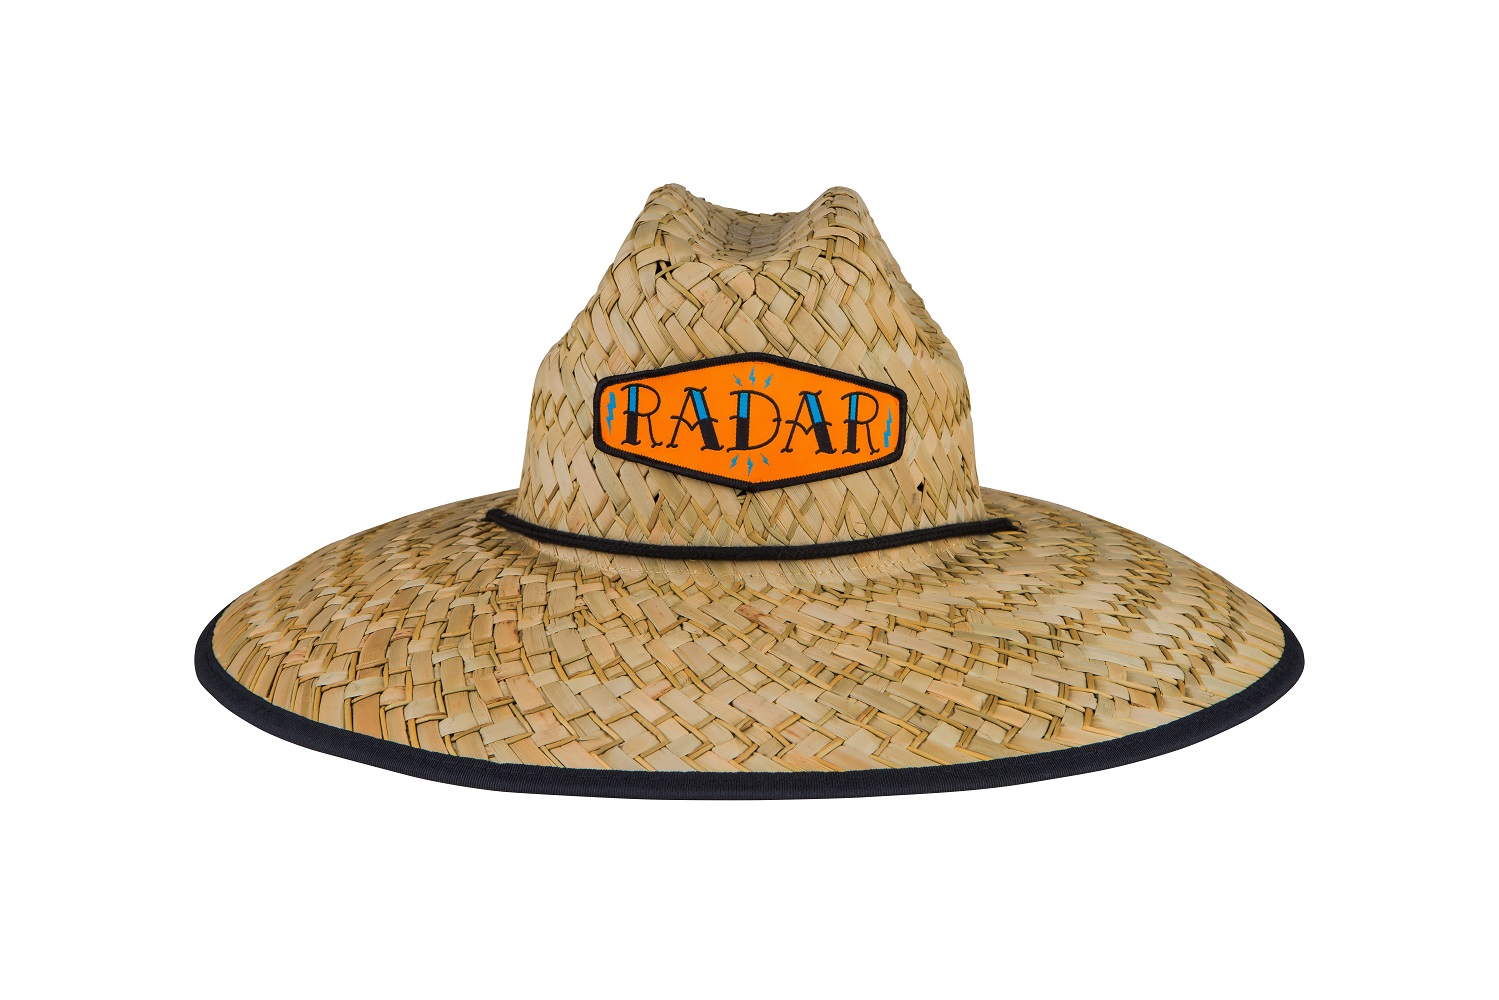 Radar Paddler's Sun Hat - Tan Straw / Collage Nylon - OSFM